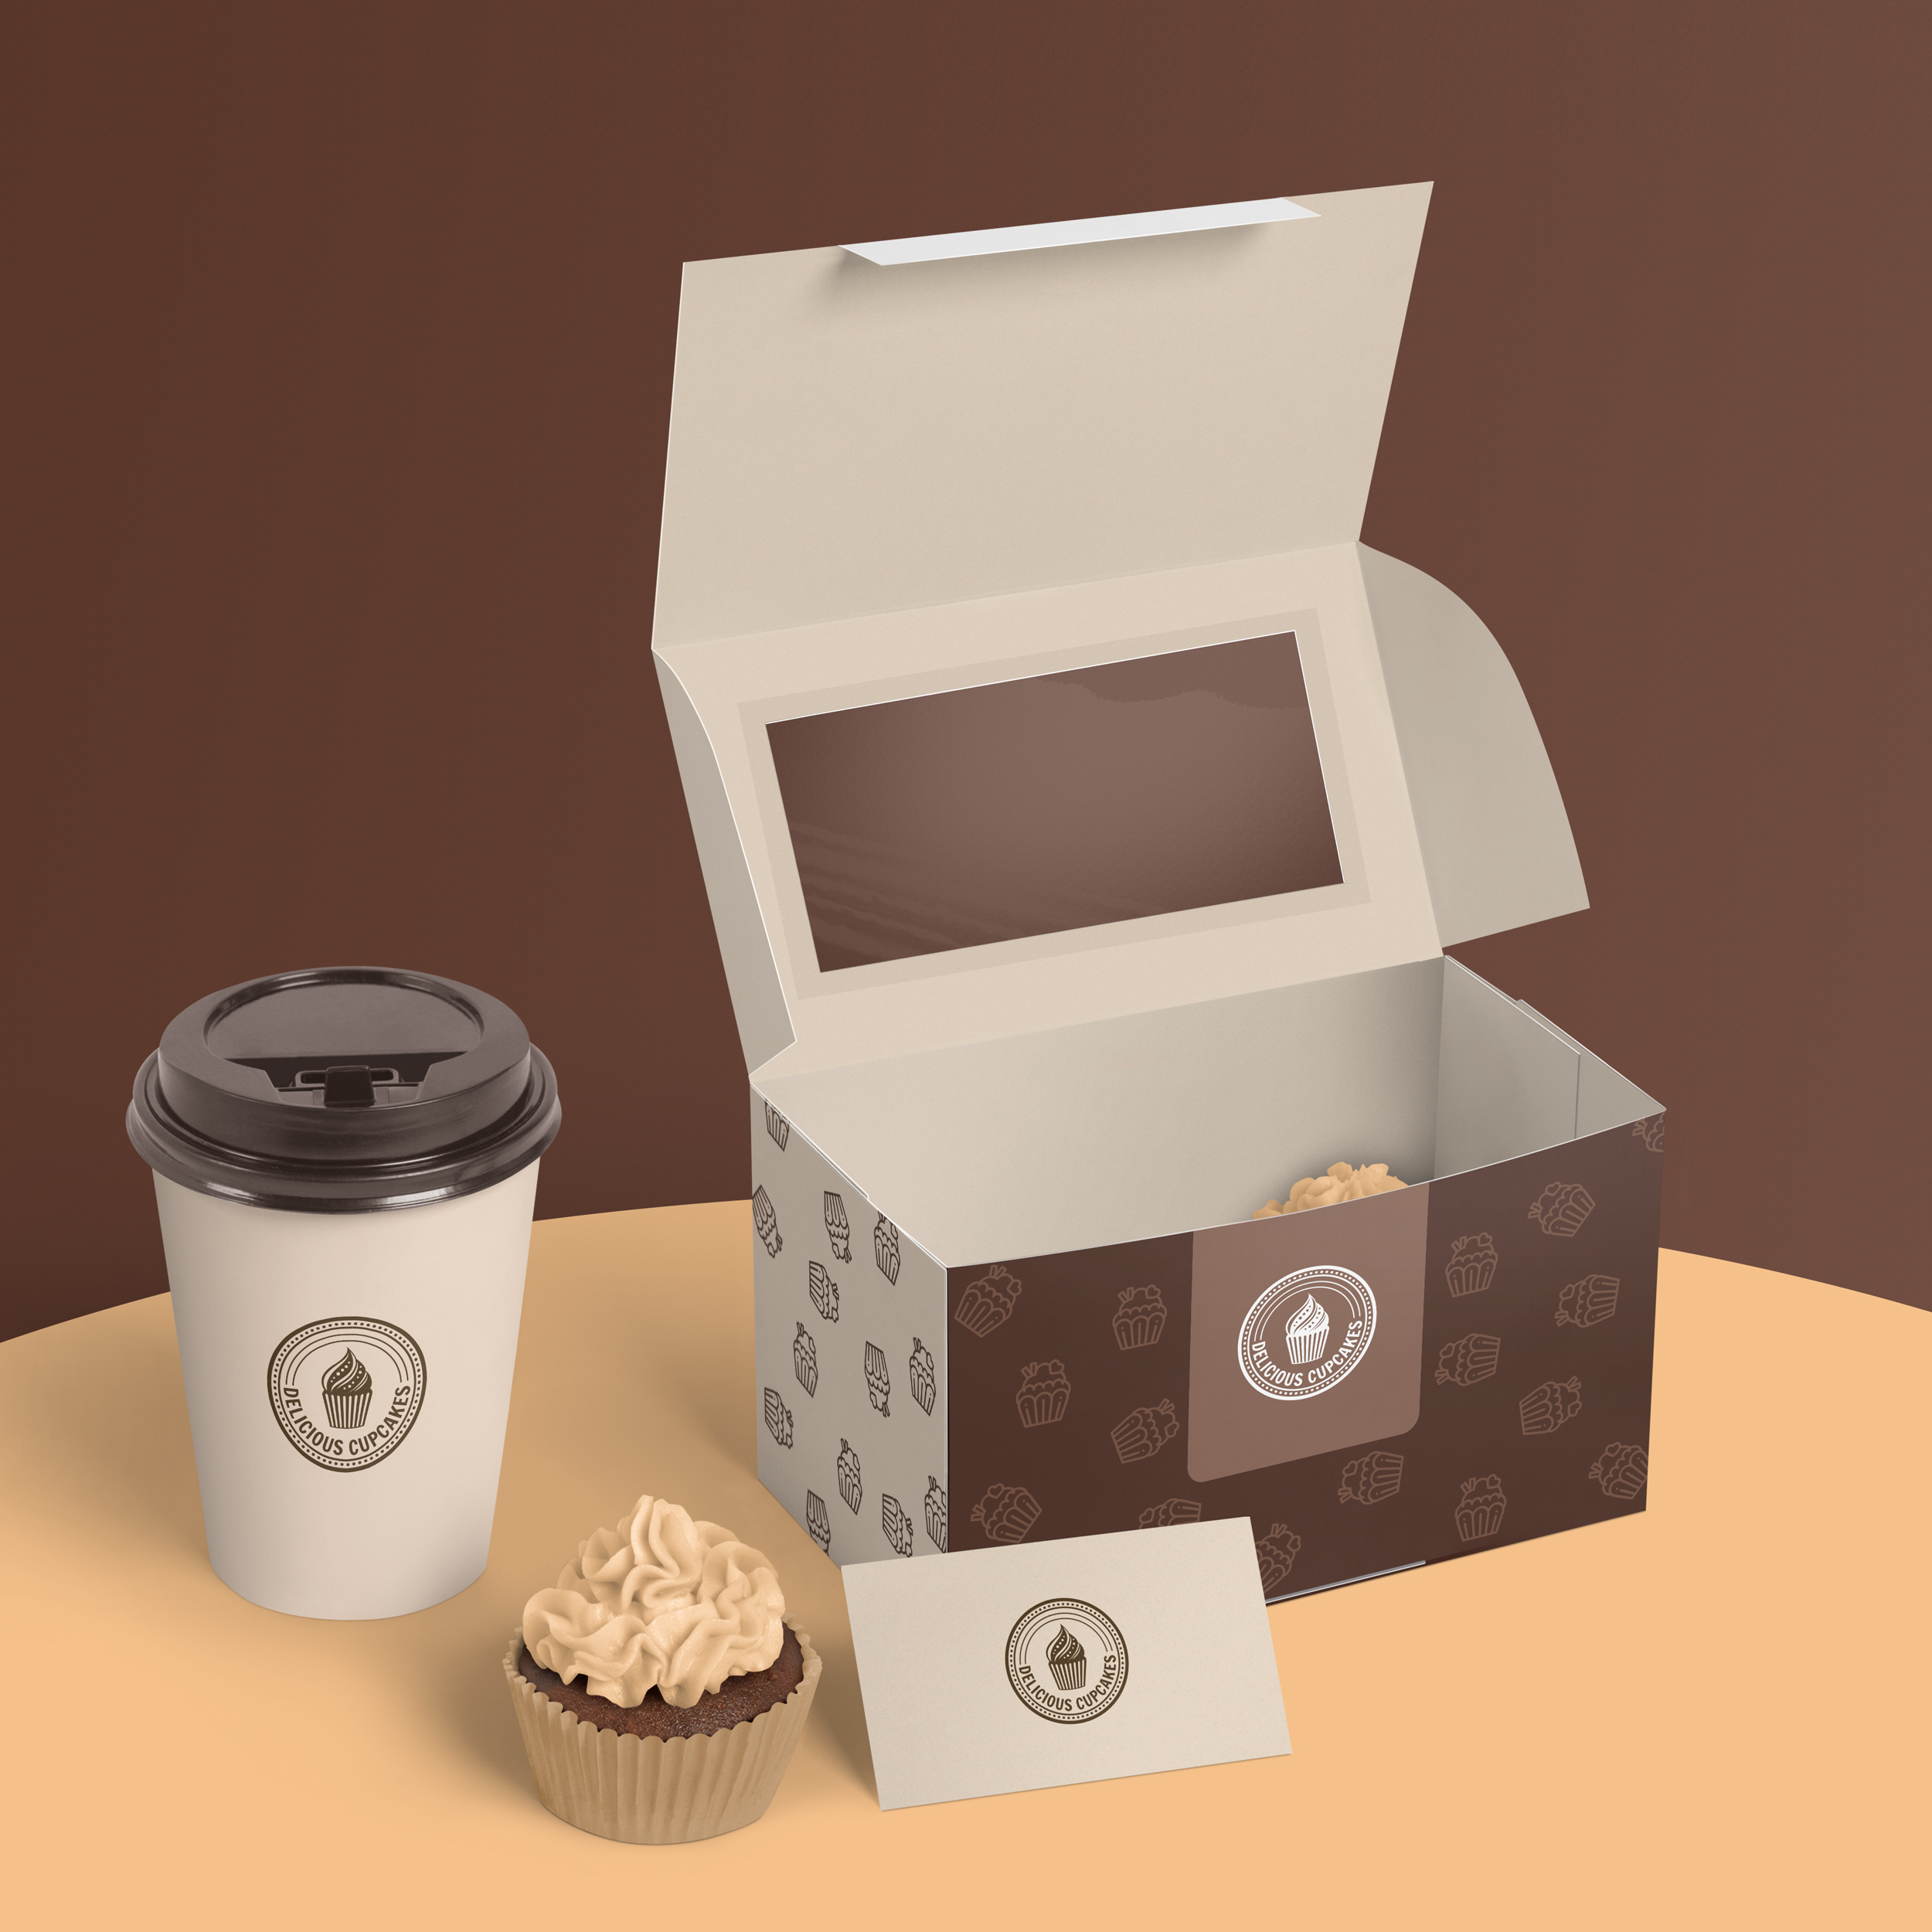 cupcake box with window and coffee cup